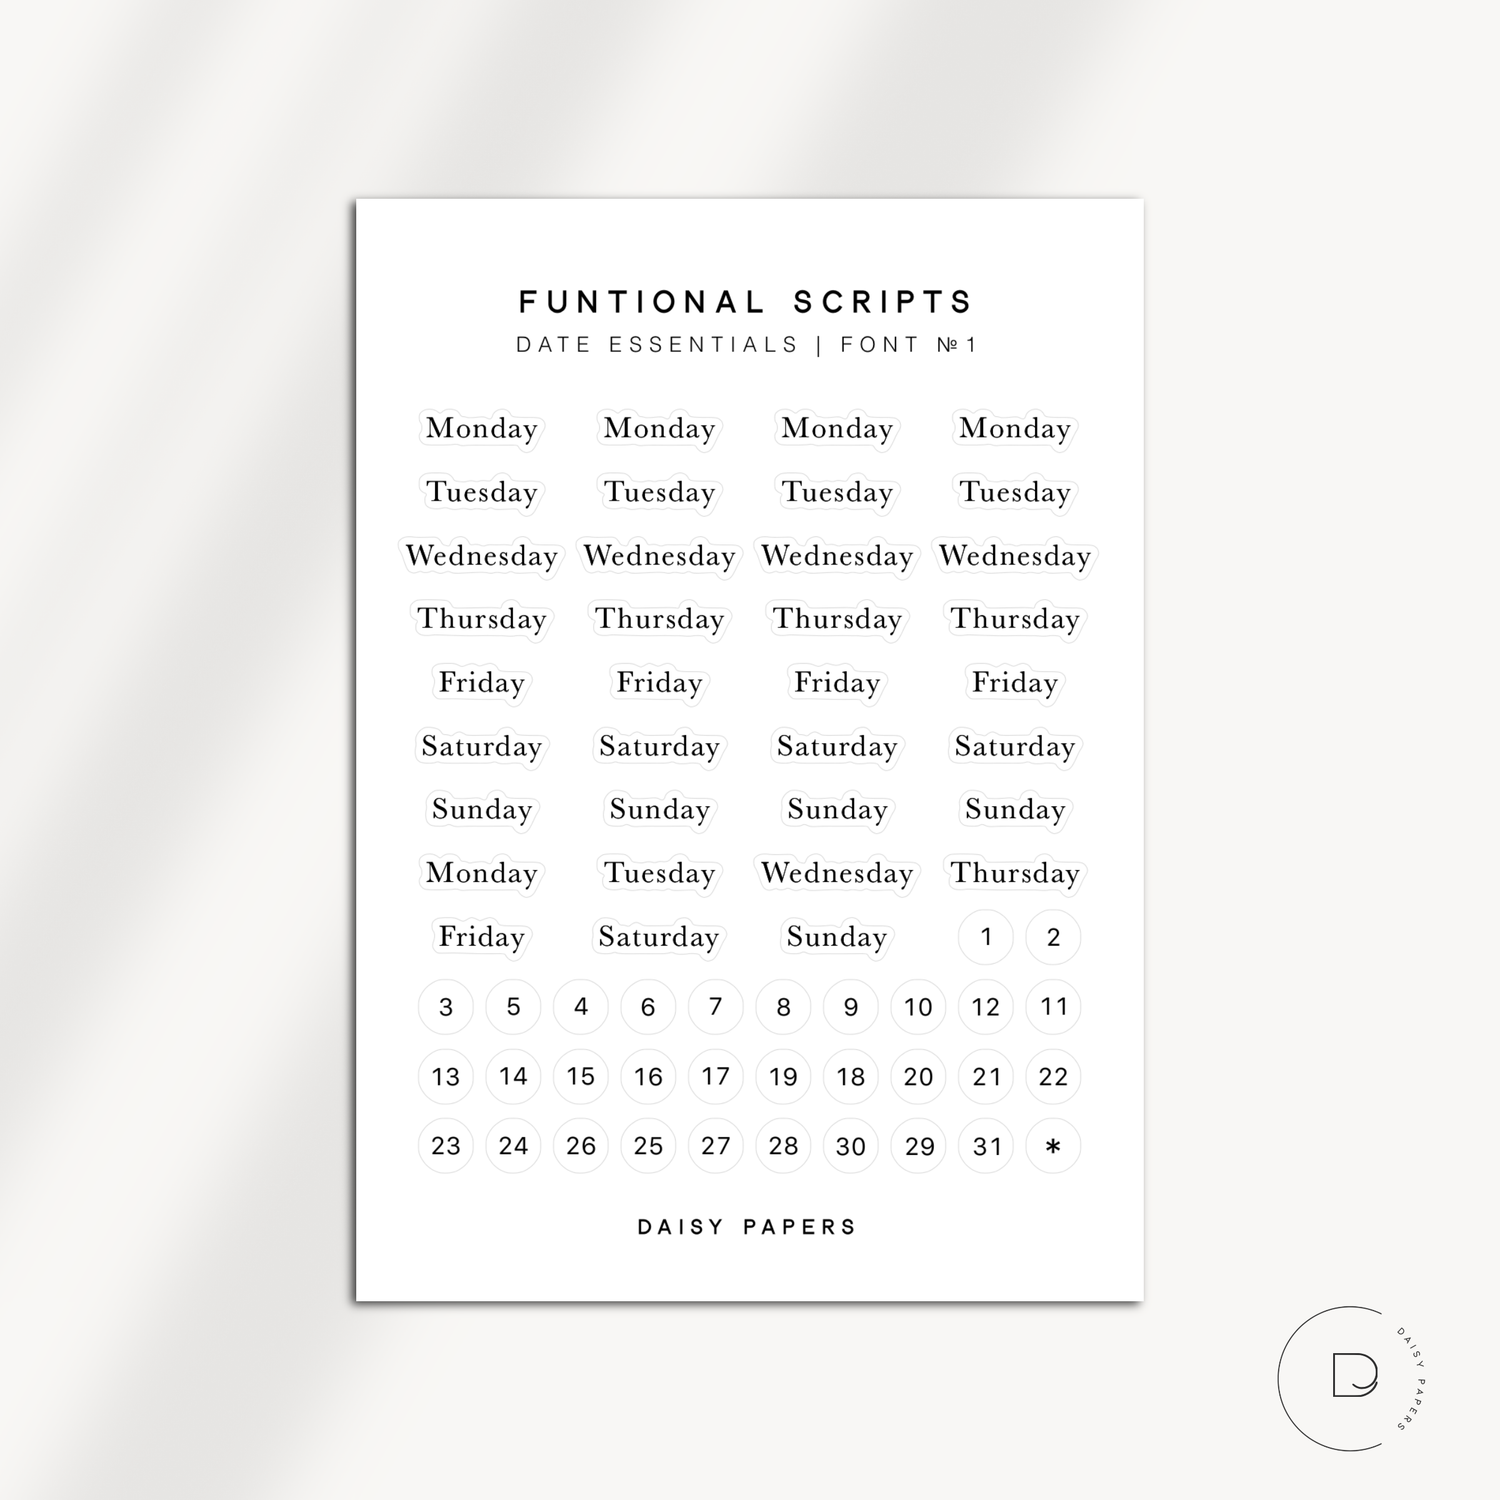 FUNCTIONAL SCRIPTS | FONT № 1 - DATE ESSENTIALS